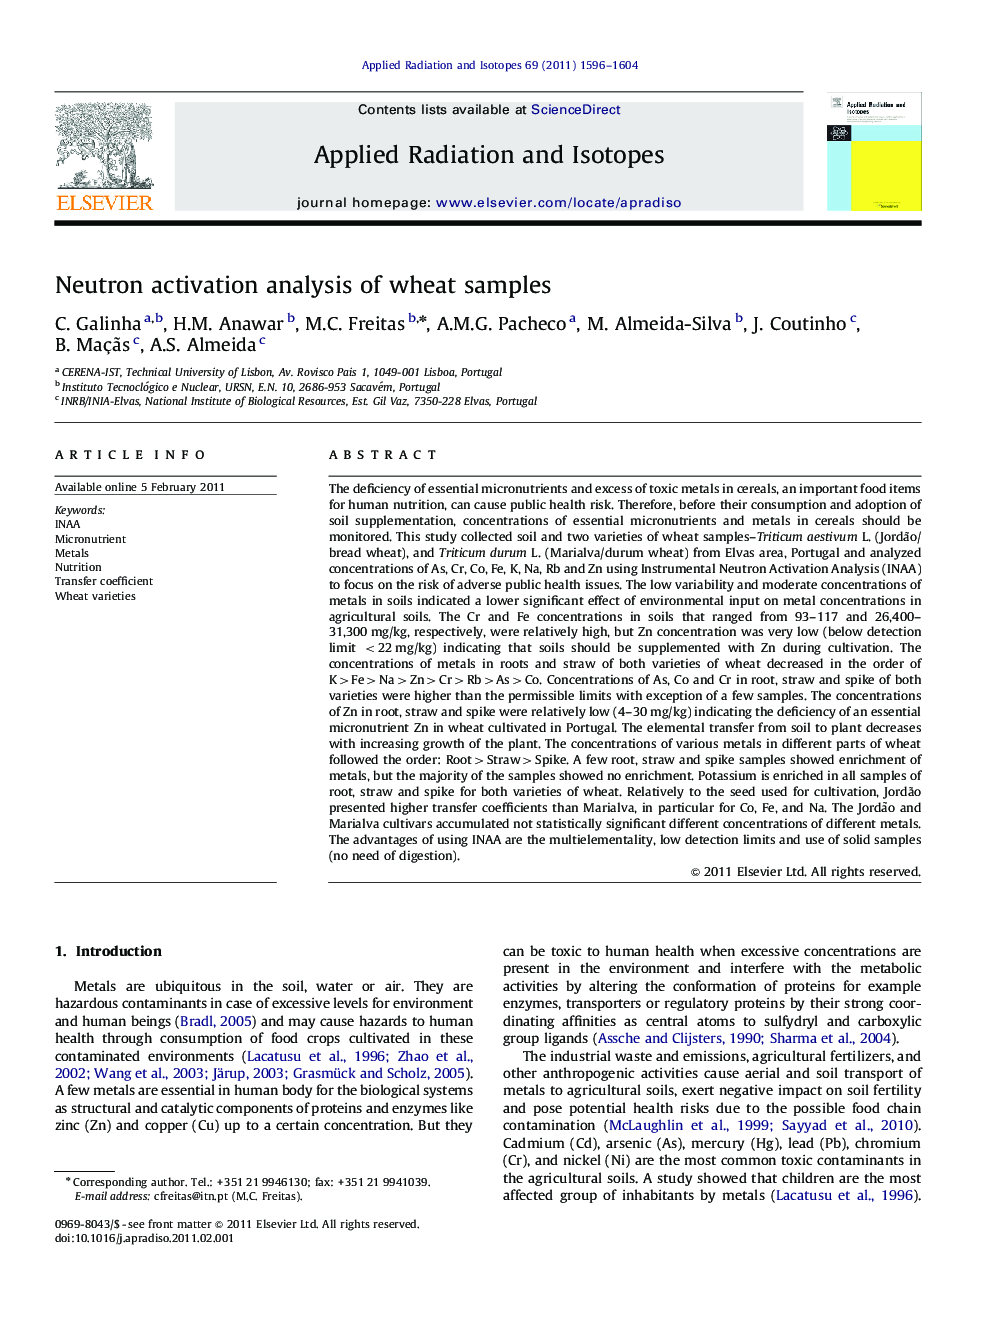 Neutron activation analysis of wheat samples